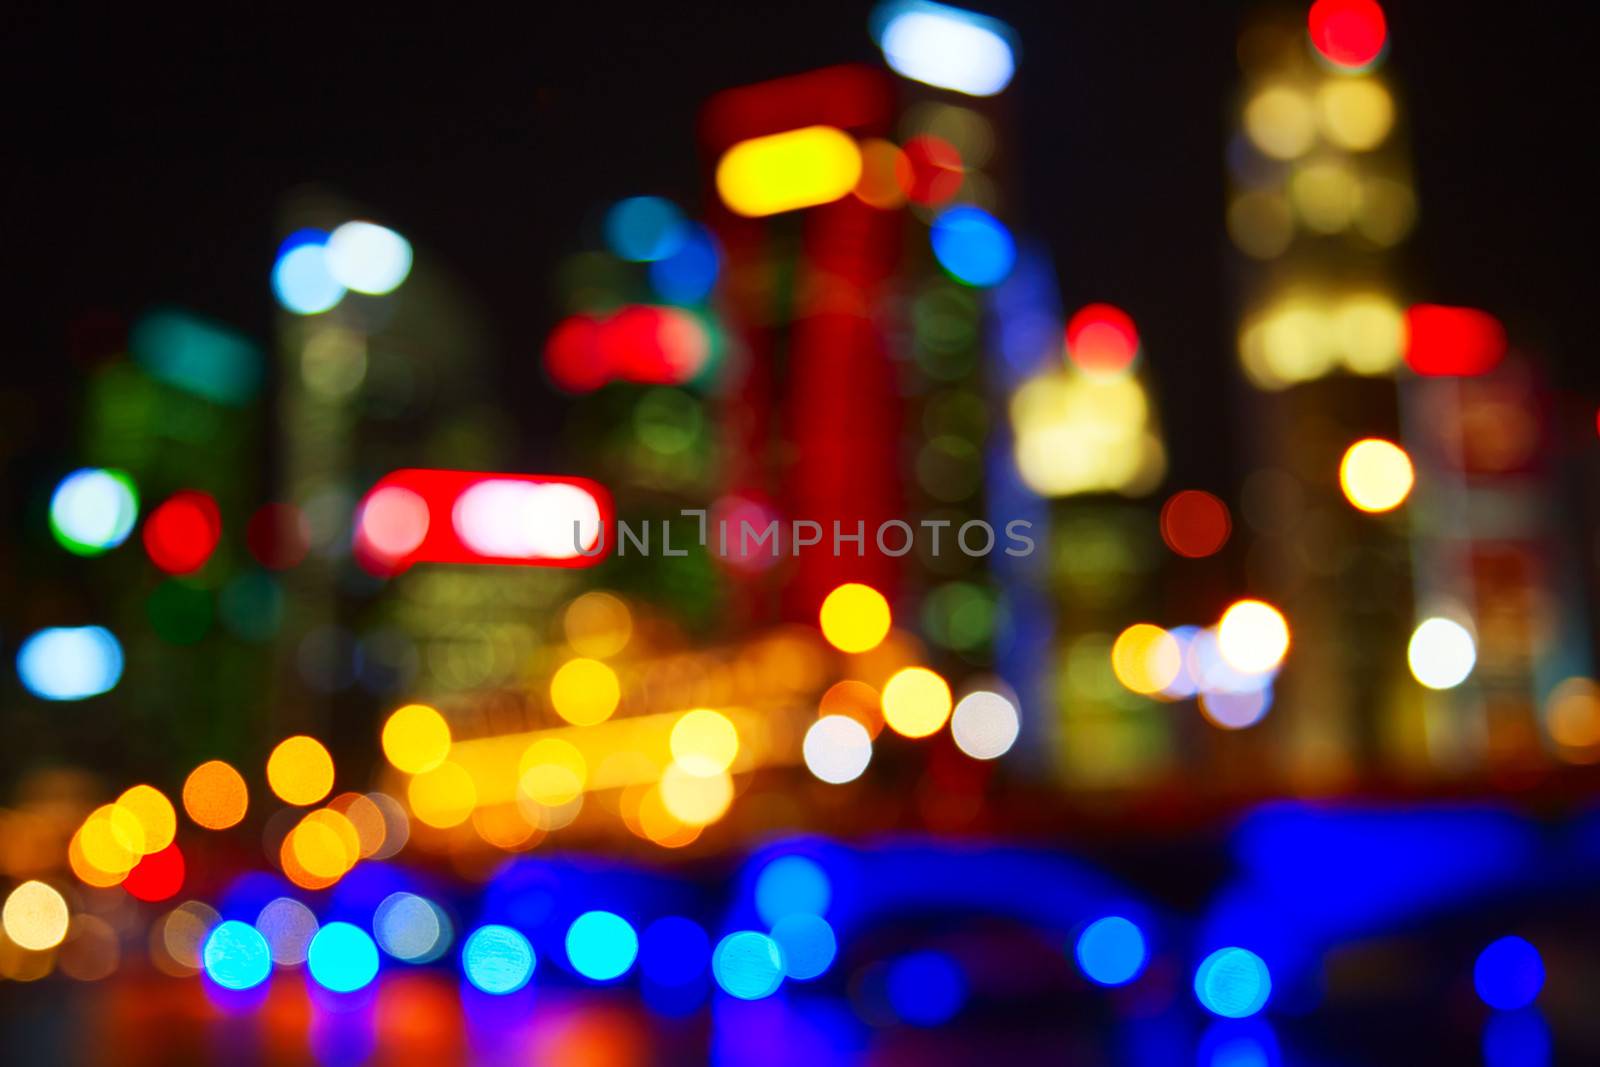 City lights by swisshippo